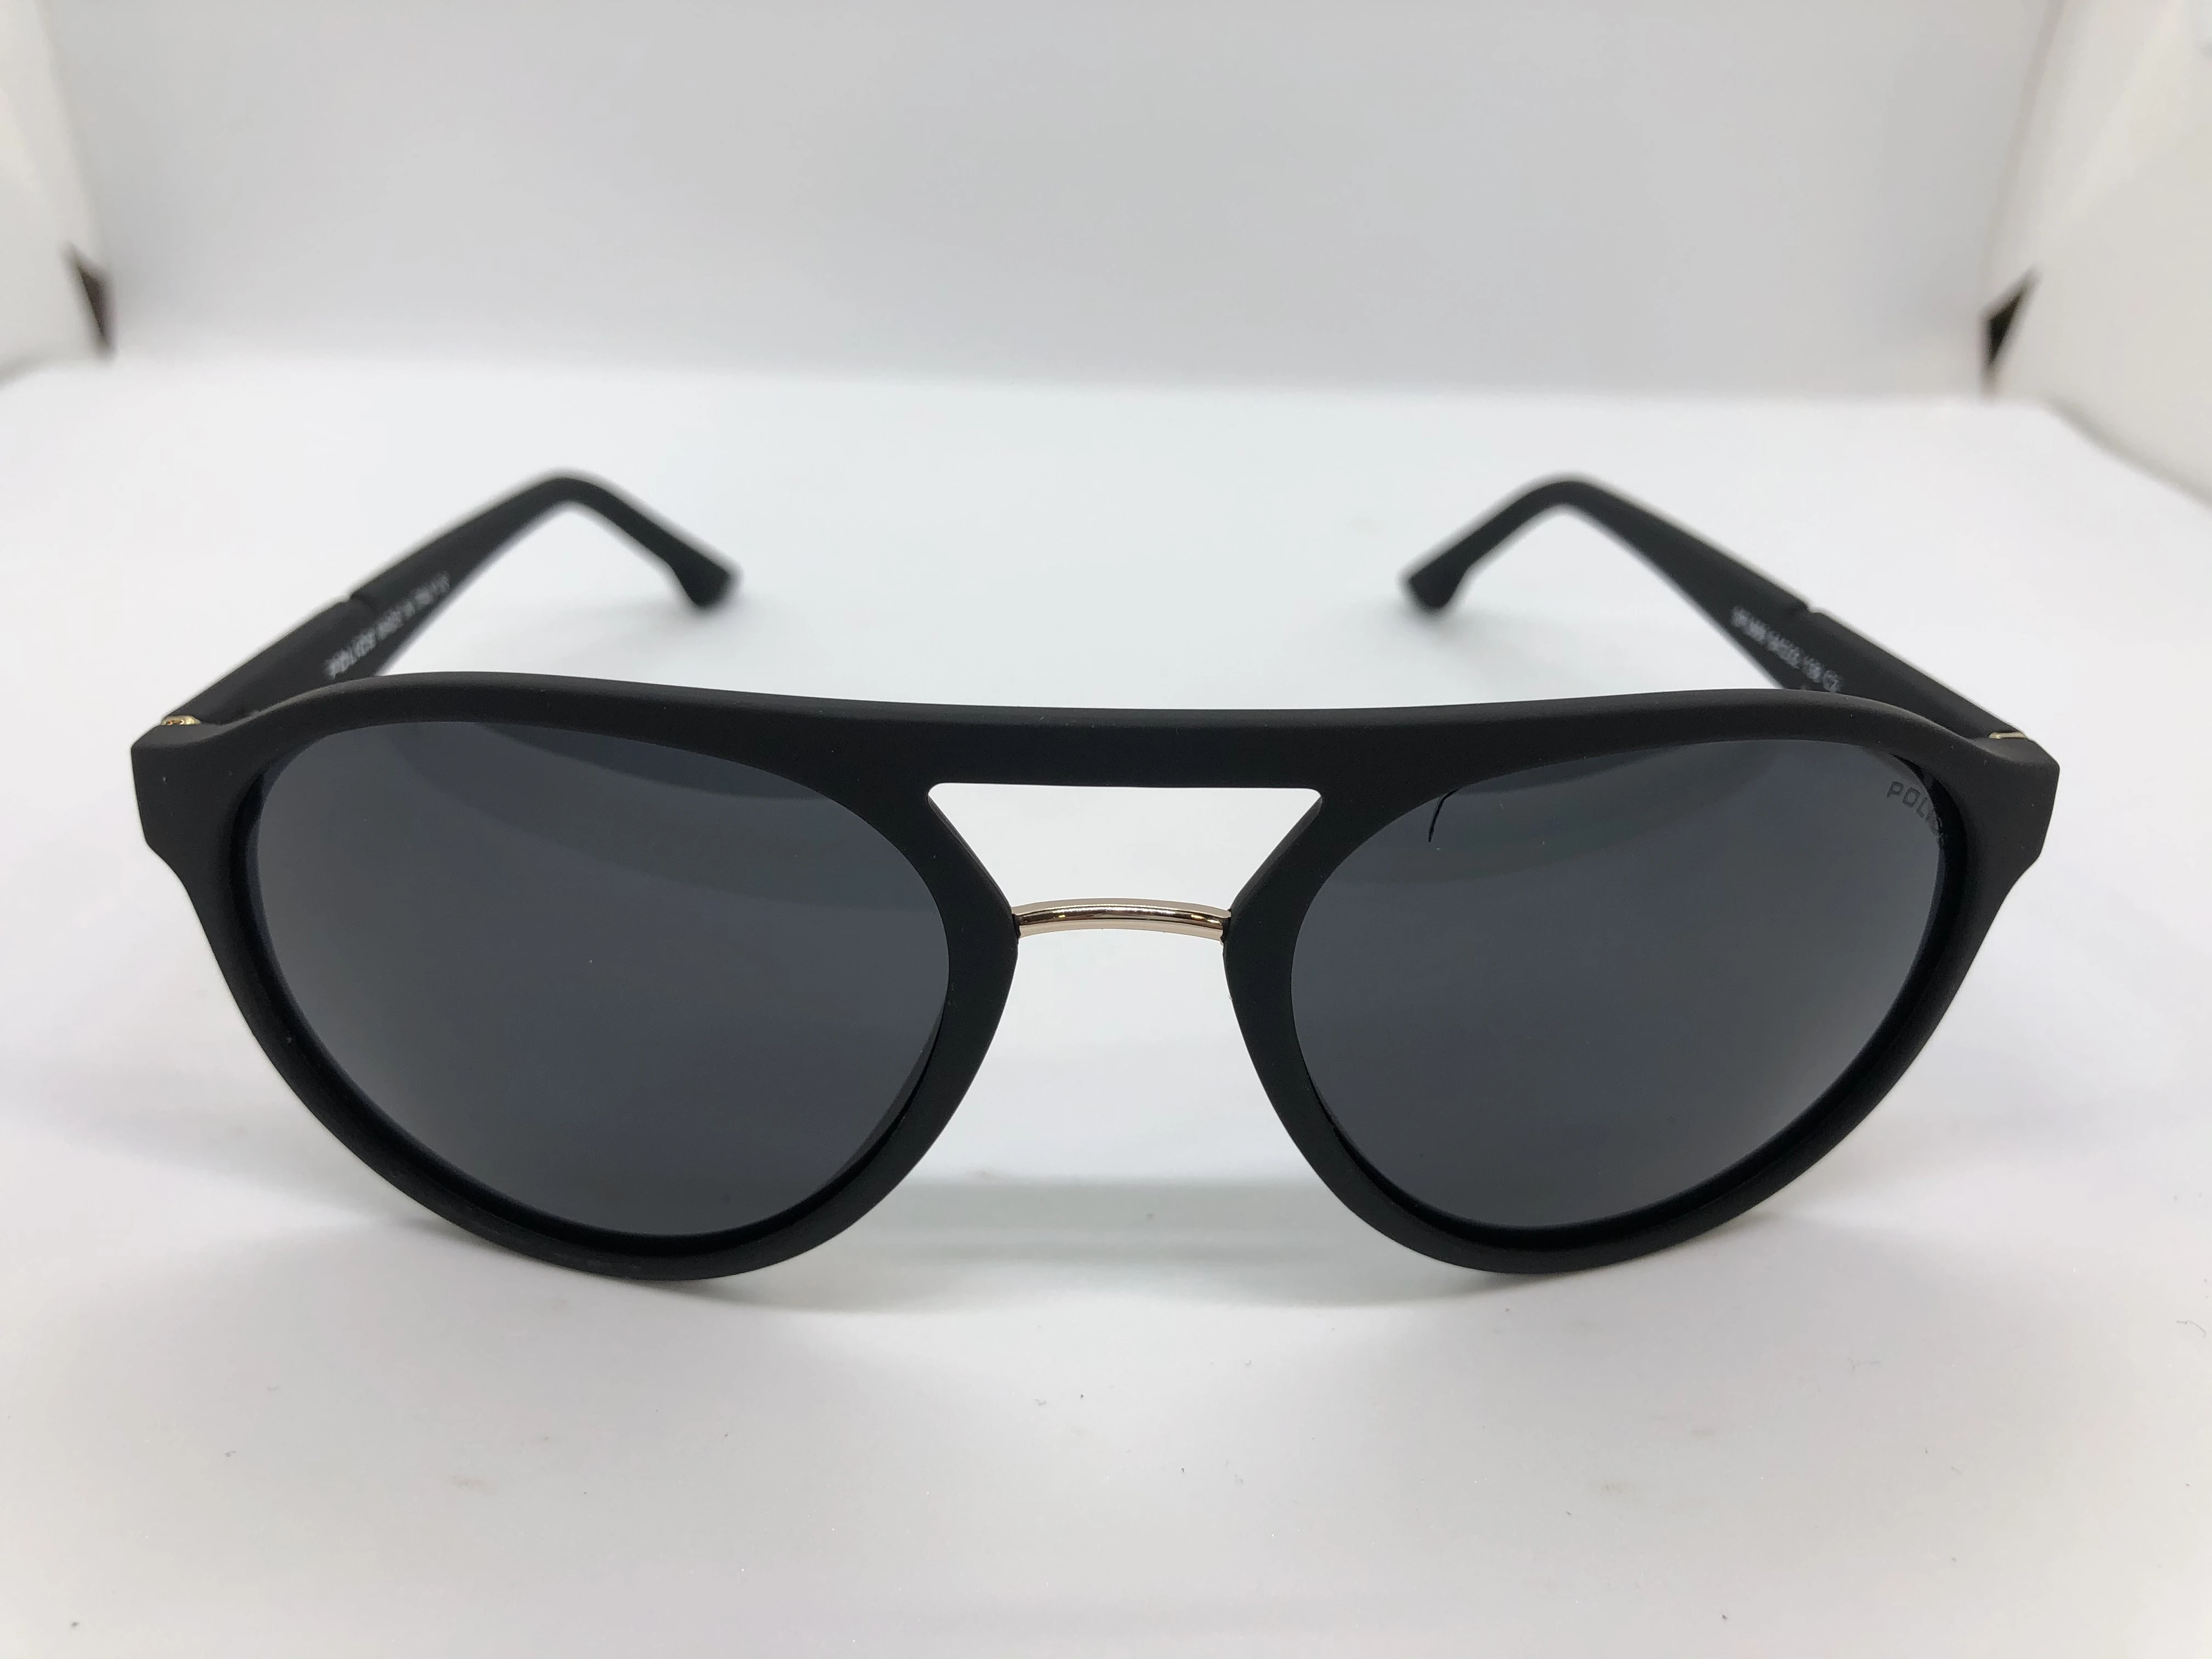 Sunglasses - from POLICE - black polycarbonate frame - black lenses - black polycarbonate arm - golden logo - men